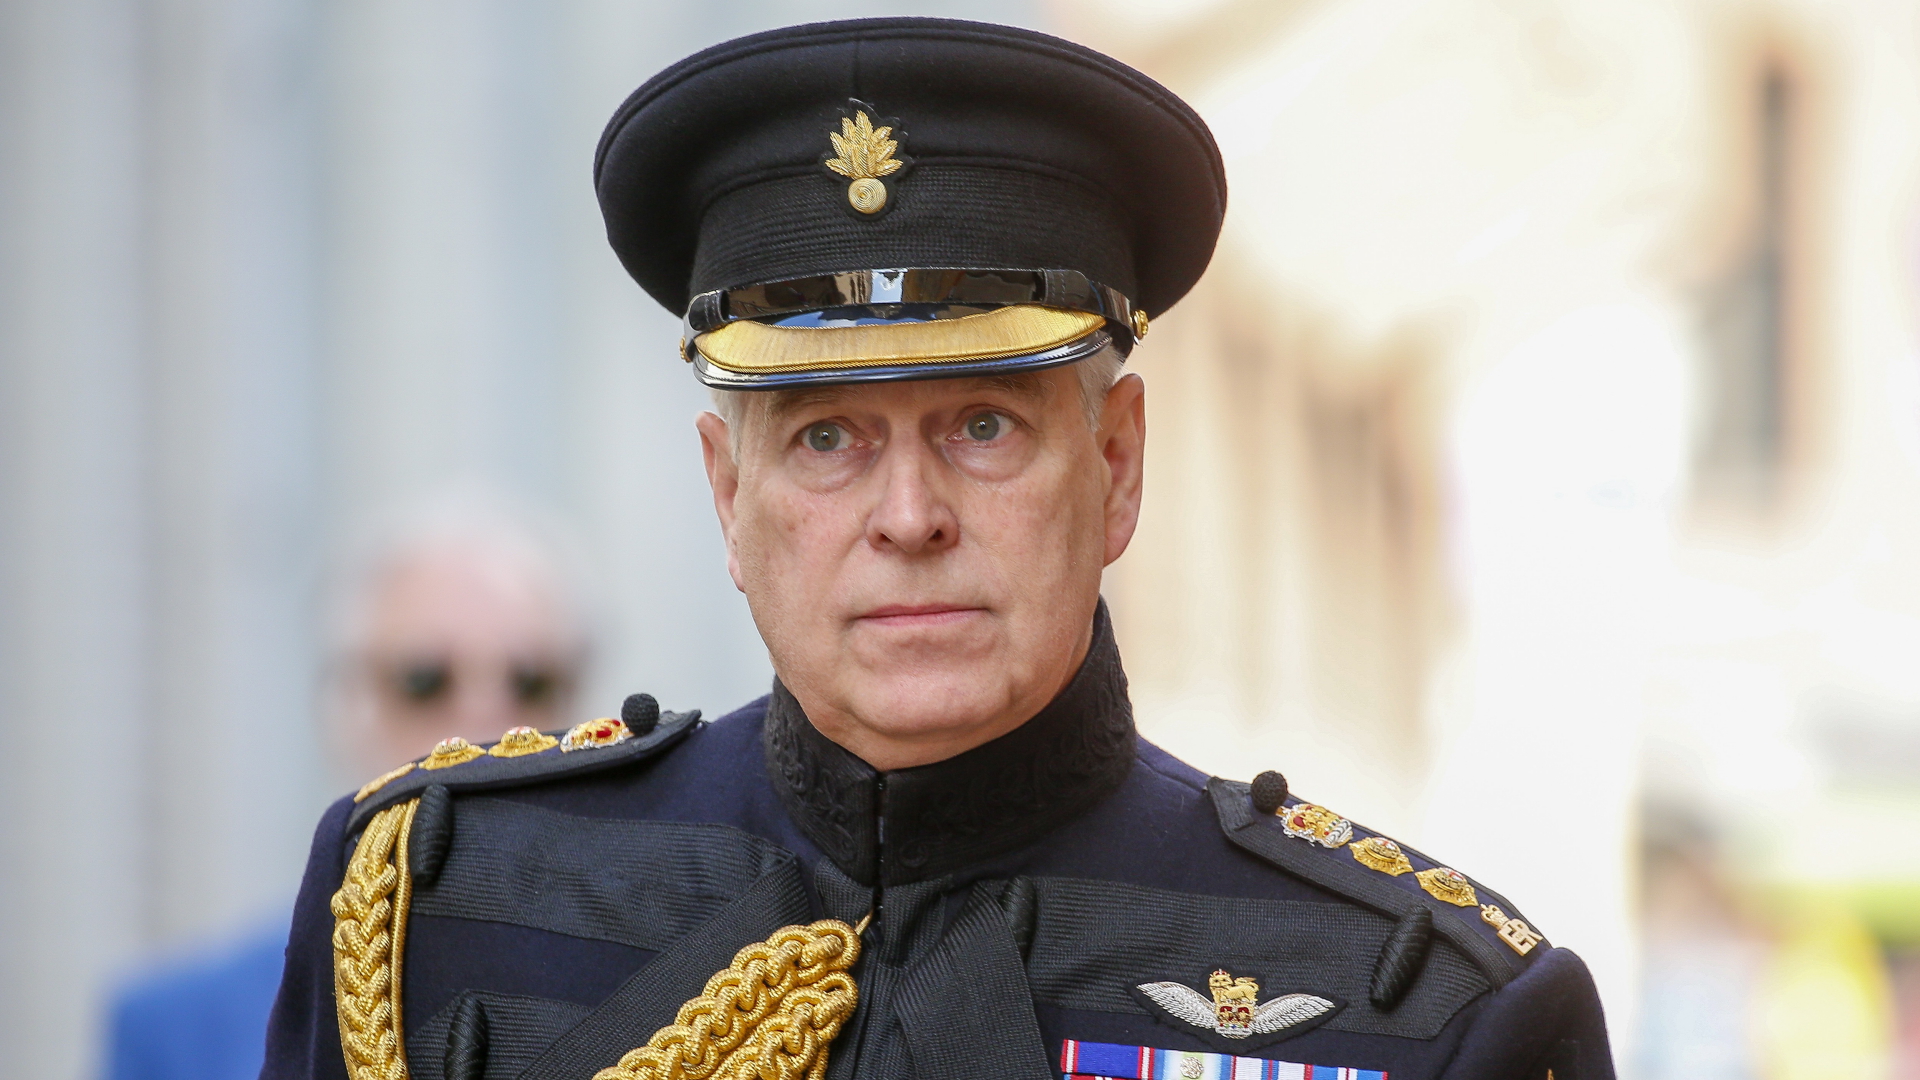 Prinz Andrew in Paradeuniform. | EPA